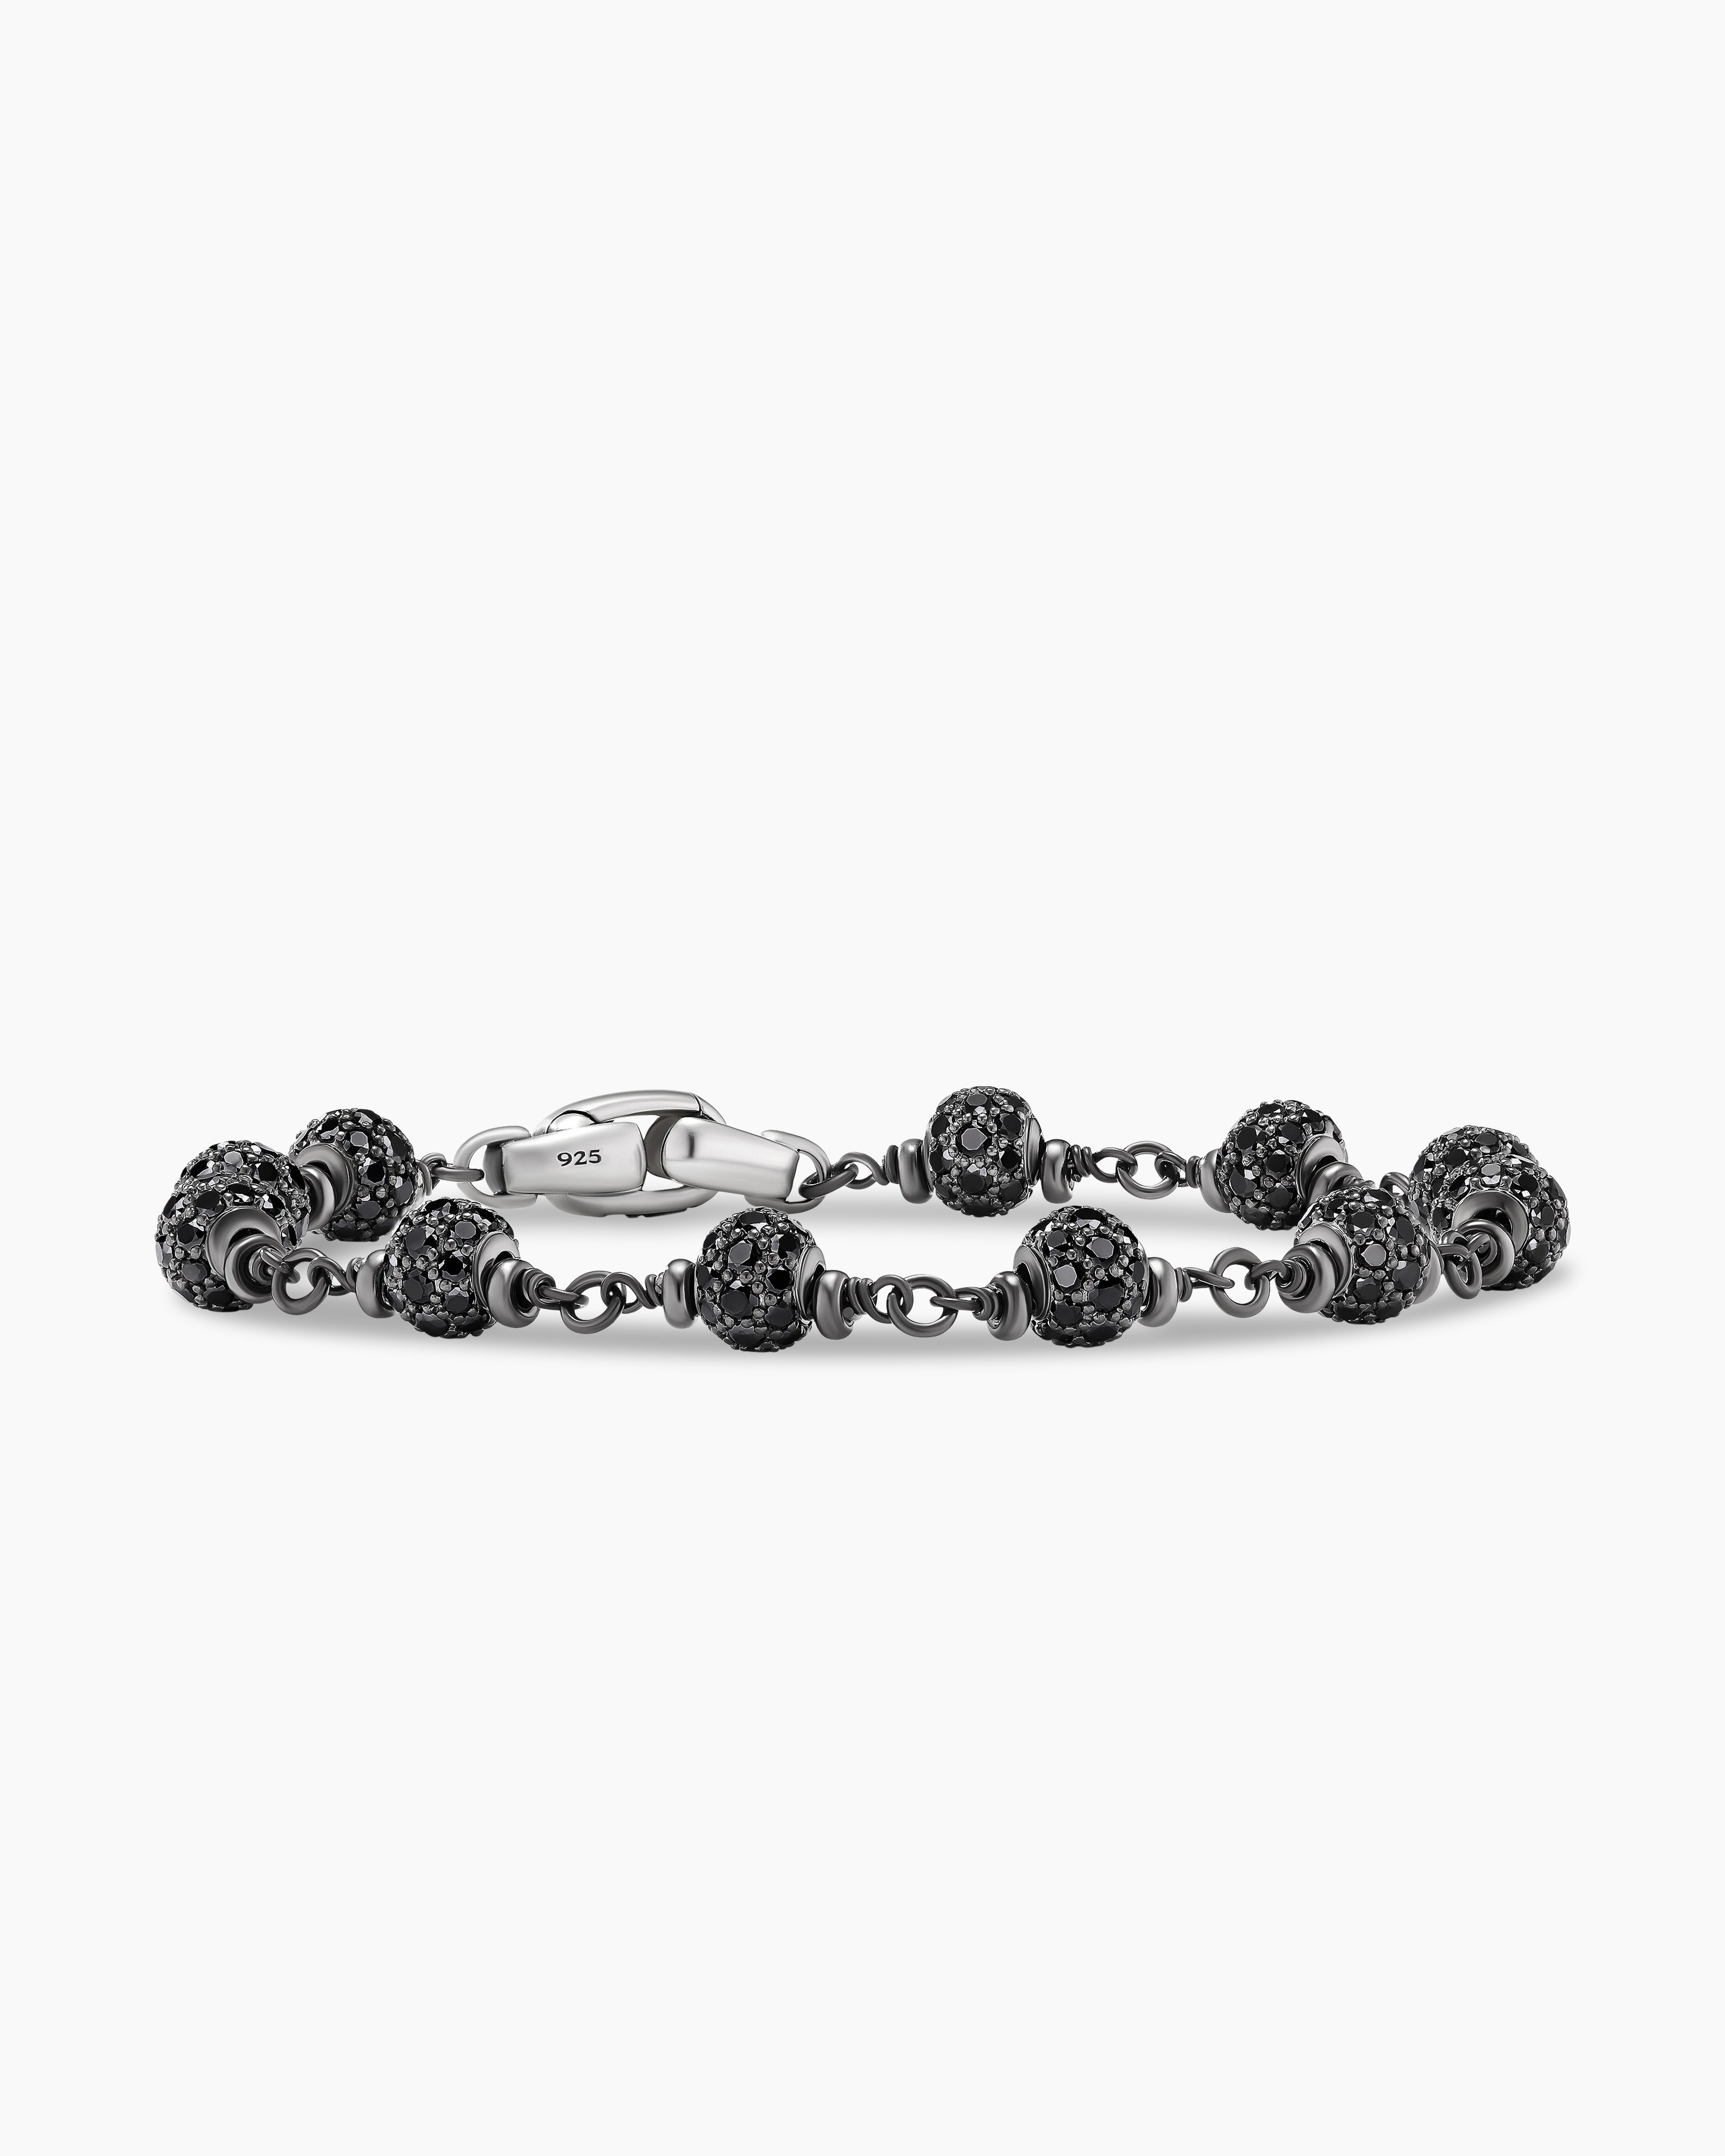 Sterling Silver Rosary Bracelet - 6mm Beads